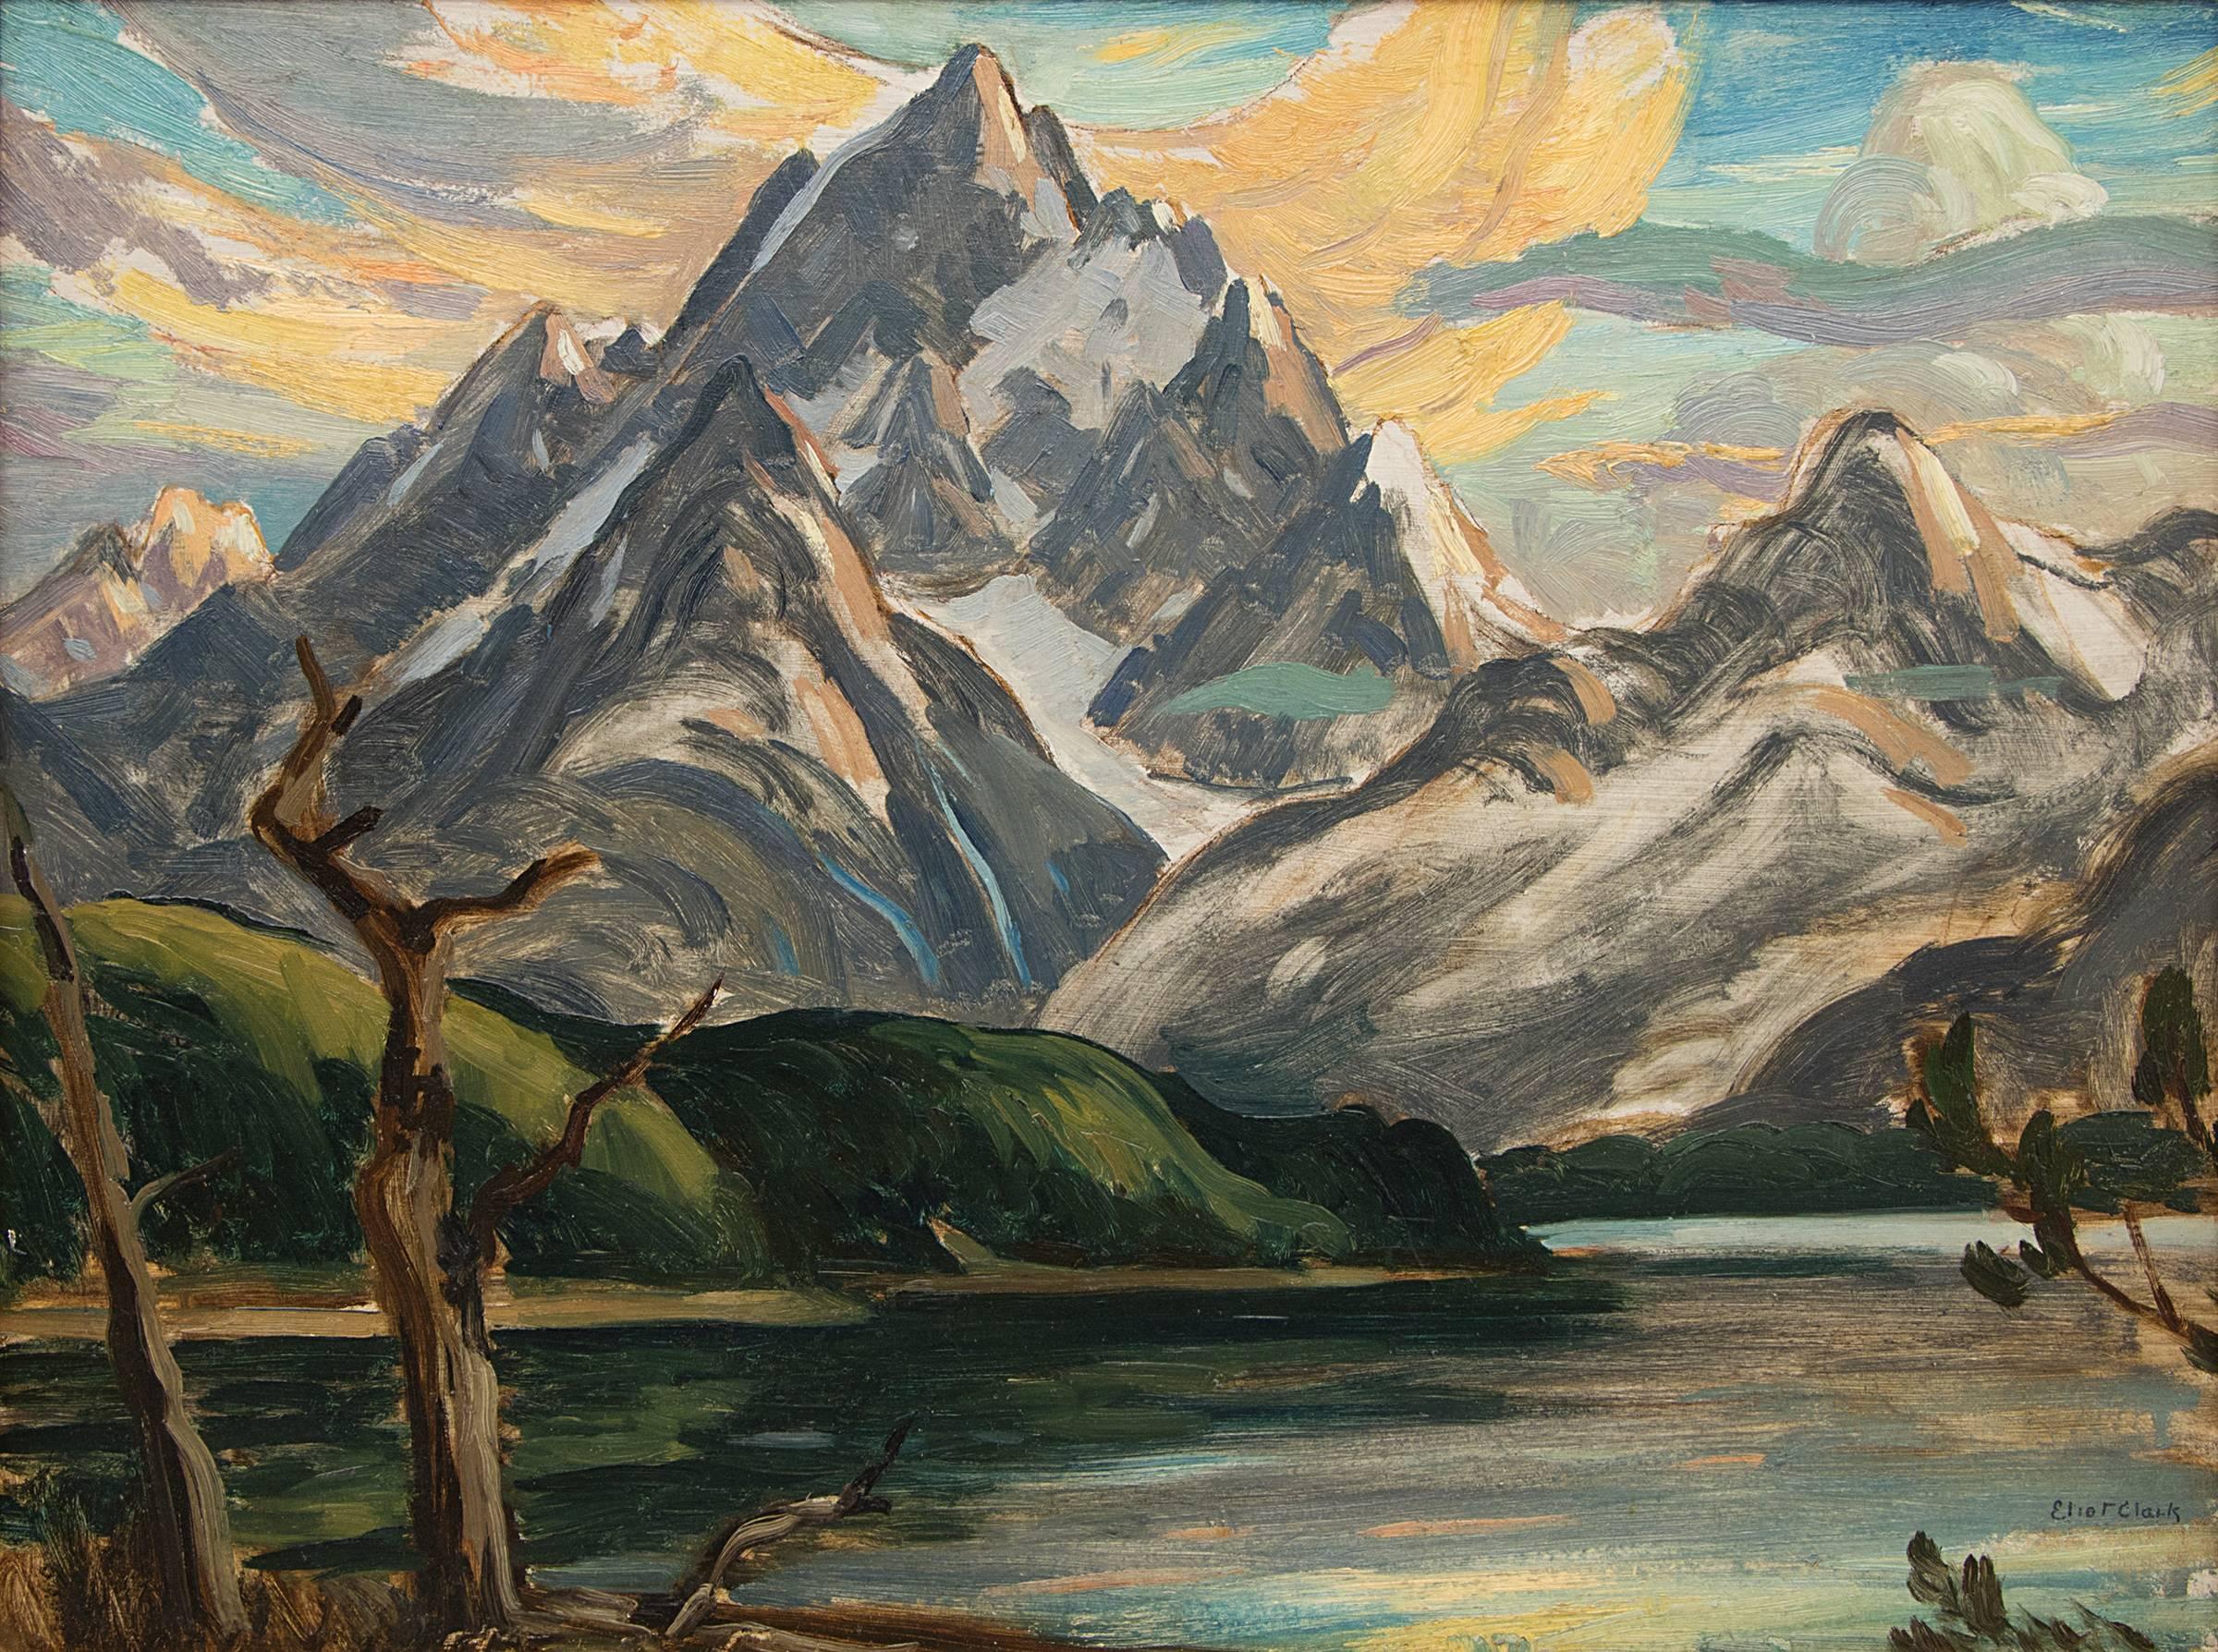 Untitled (The Grand Tetons and Jackson Lake, Wyoming Mountain Landscape) – Painting von Eliot Clark